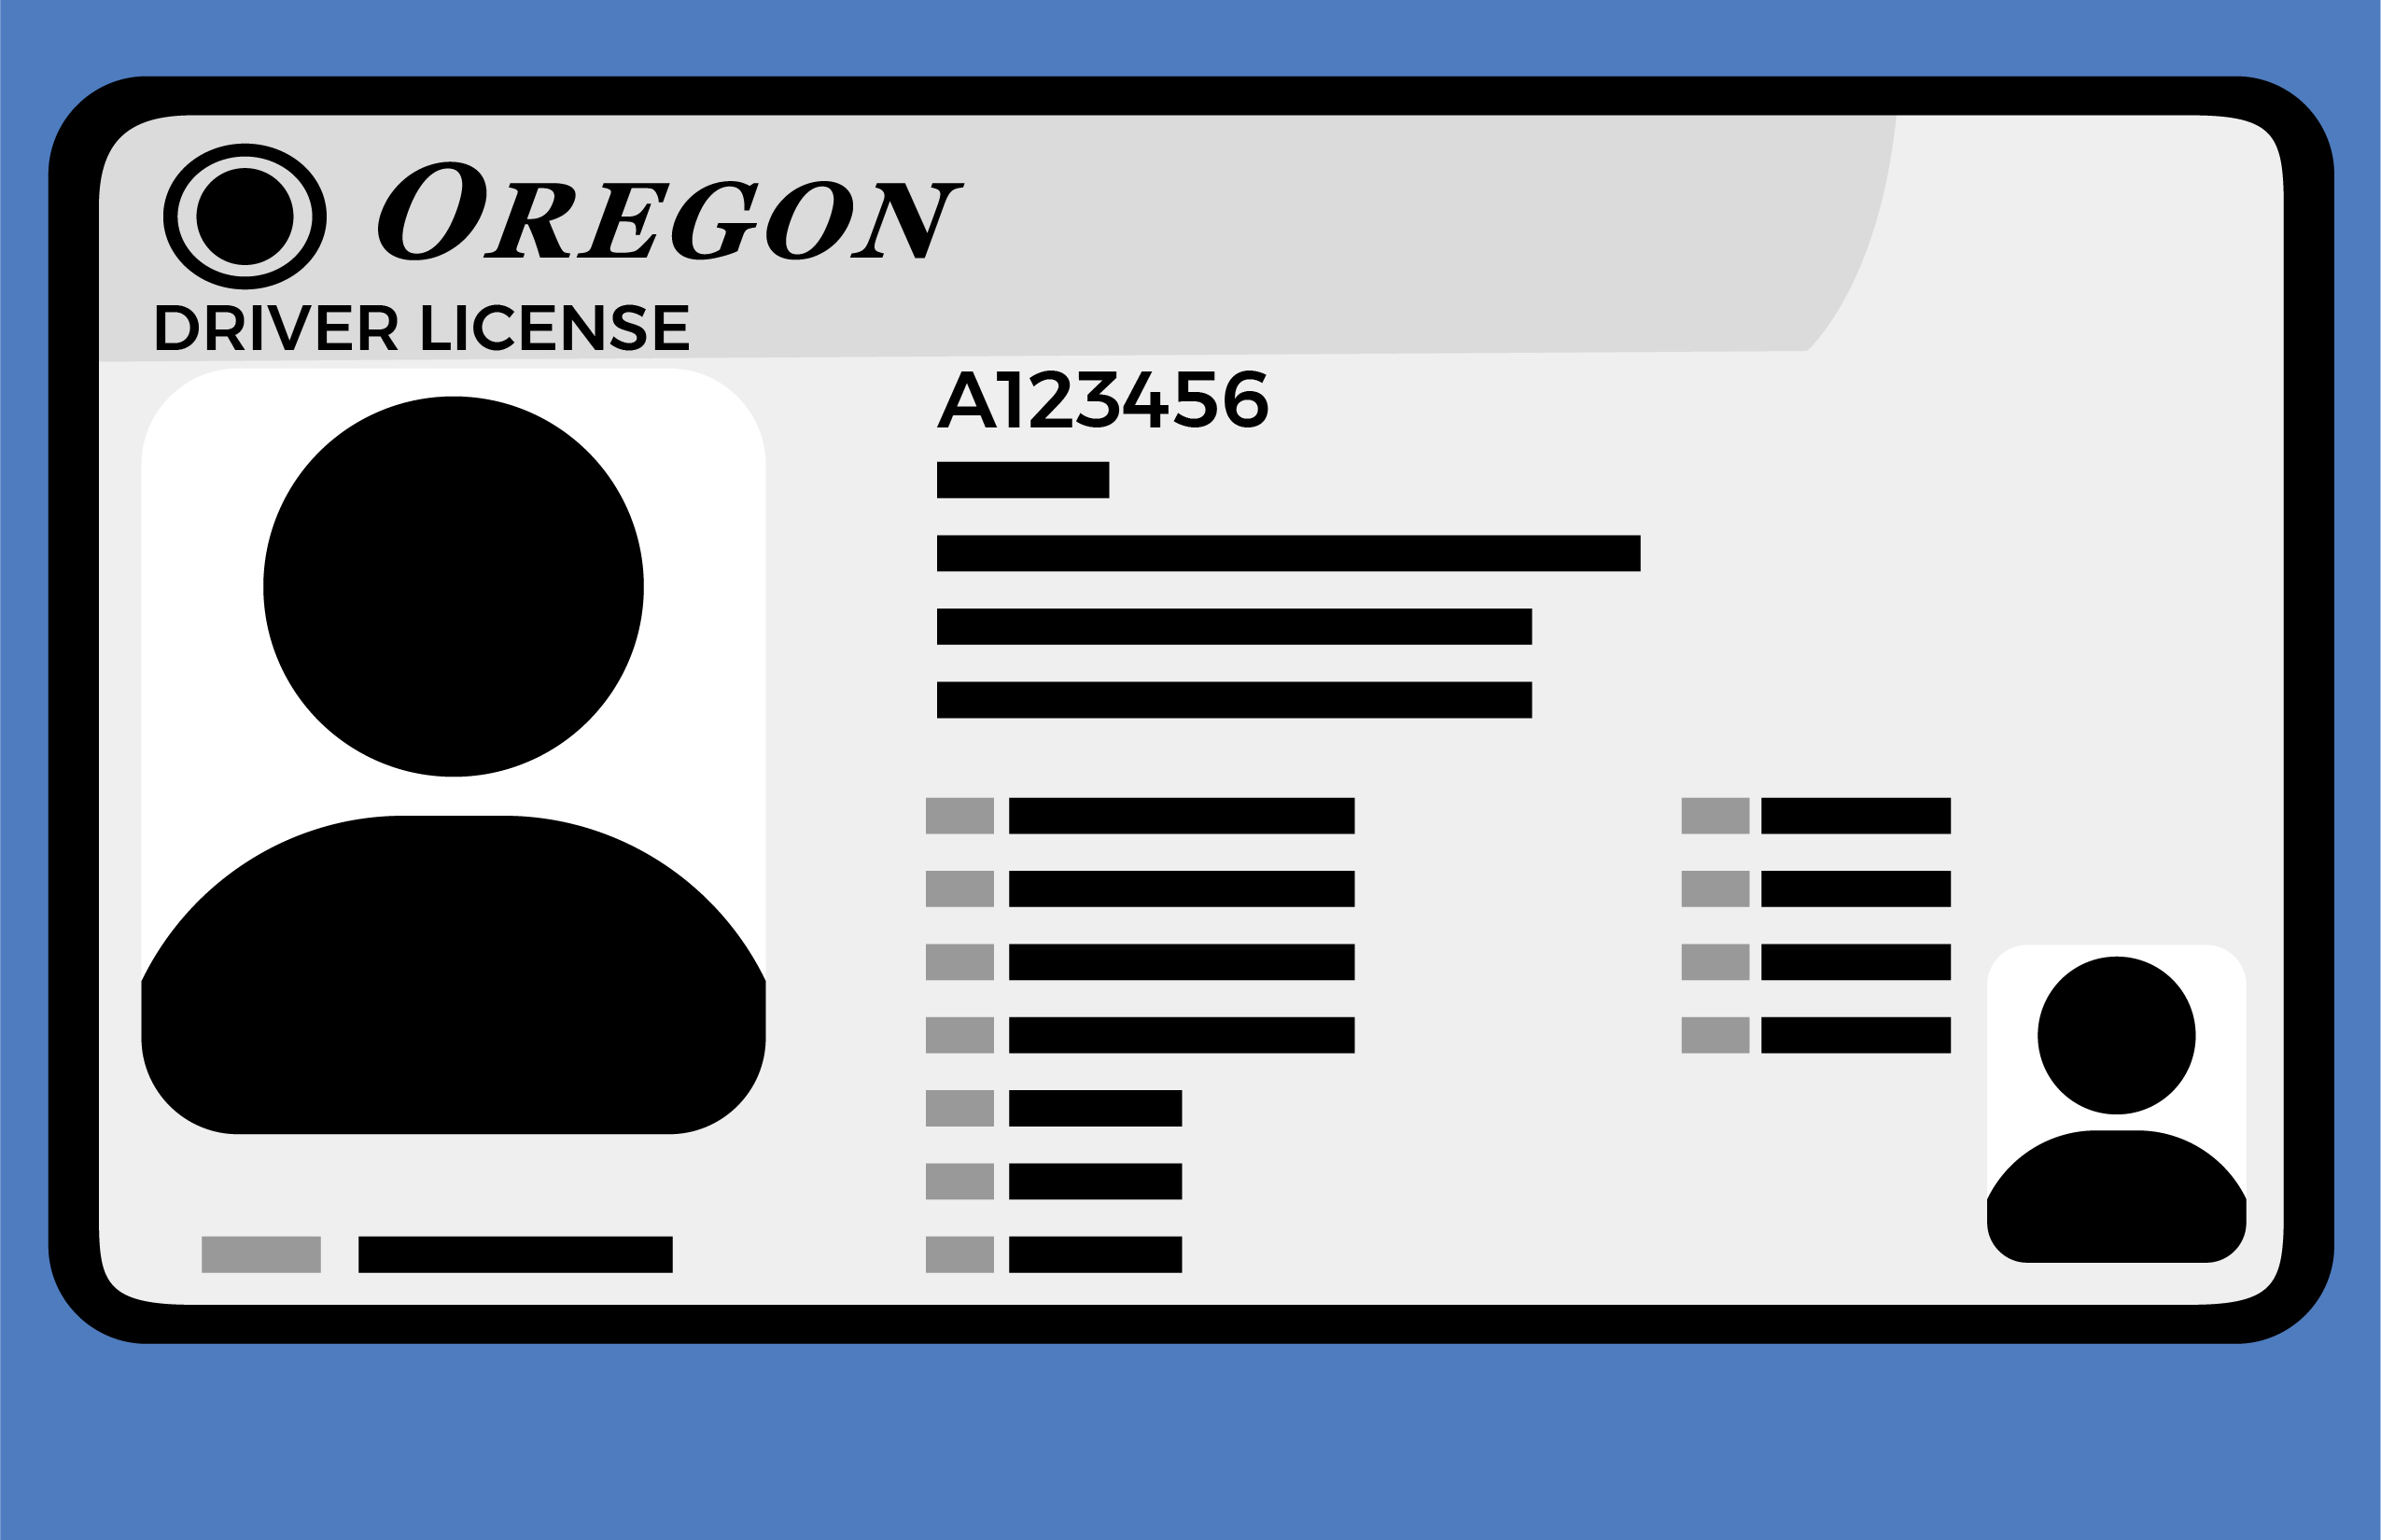 Oregon Department of Transportation Page Driver's License